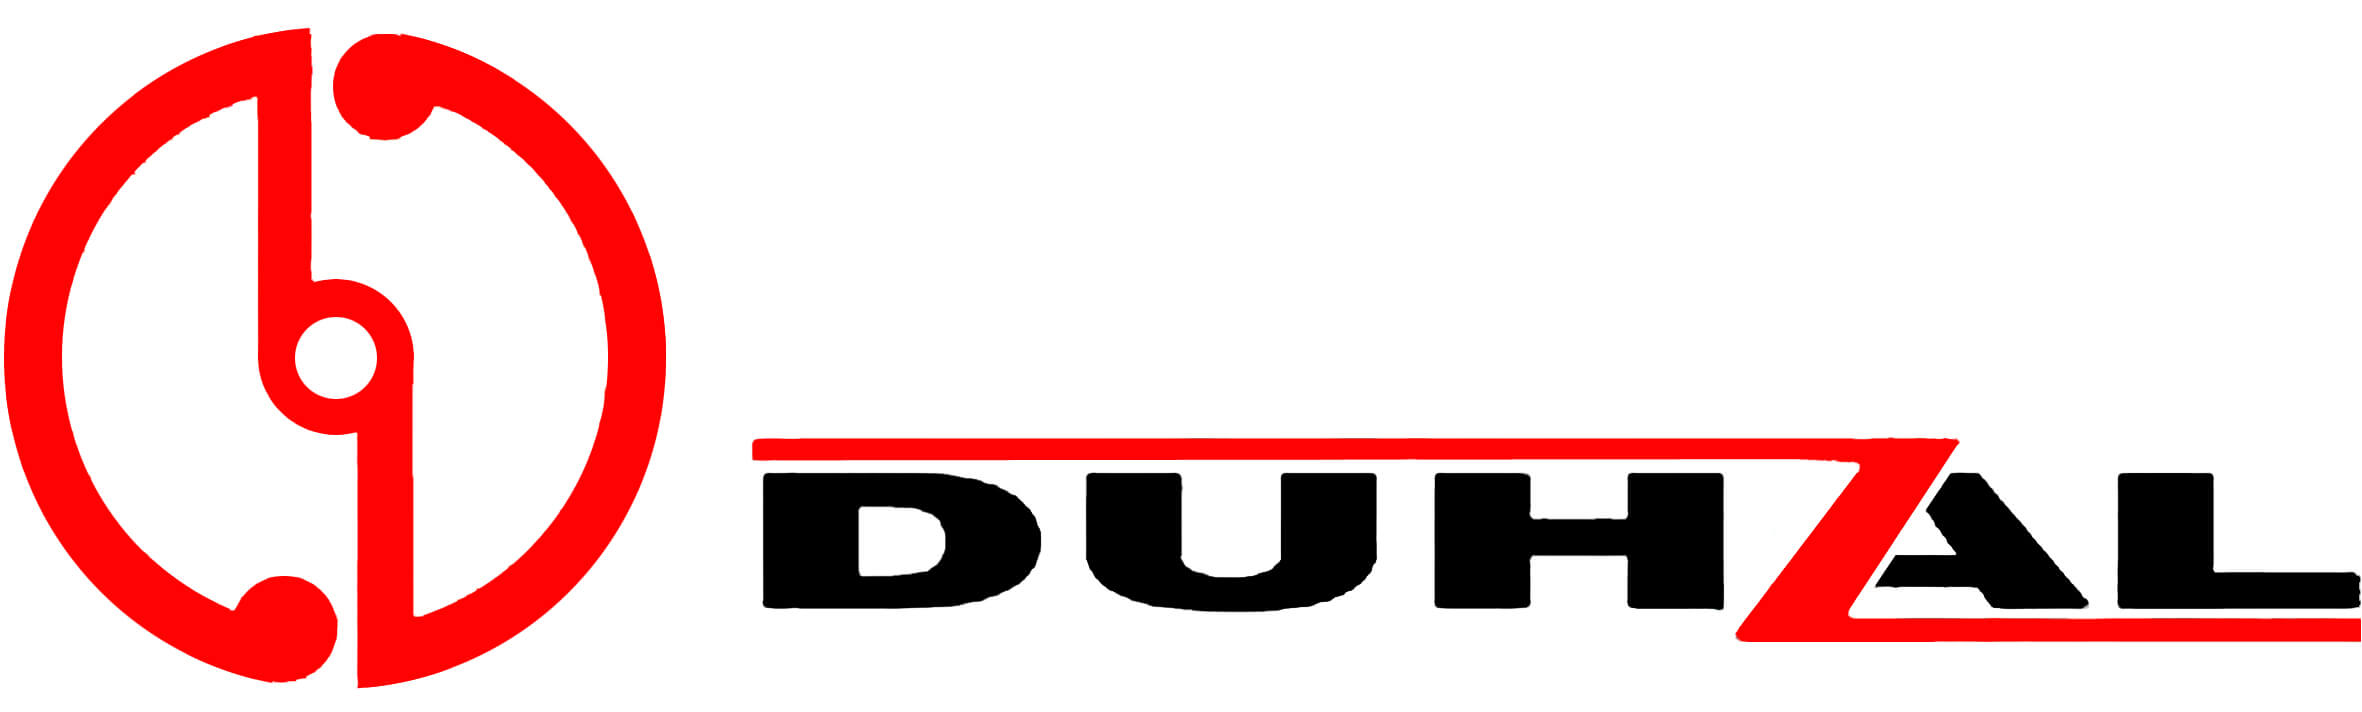 Logo Đèn Led Duhal